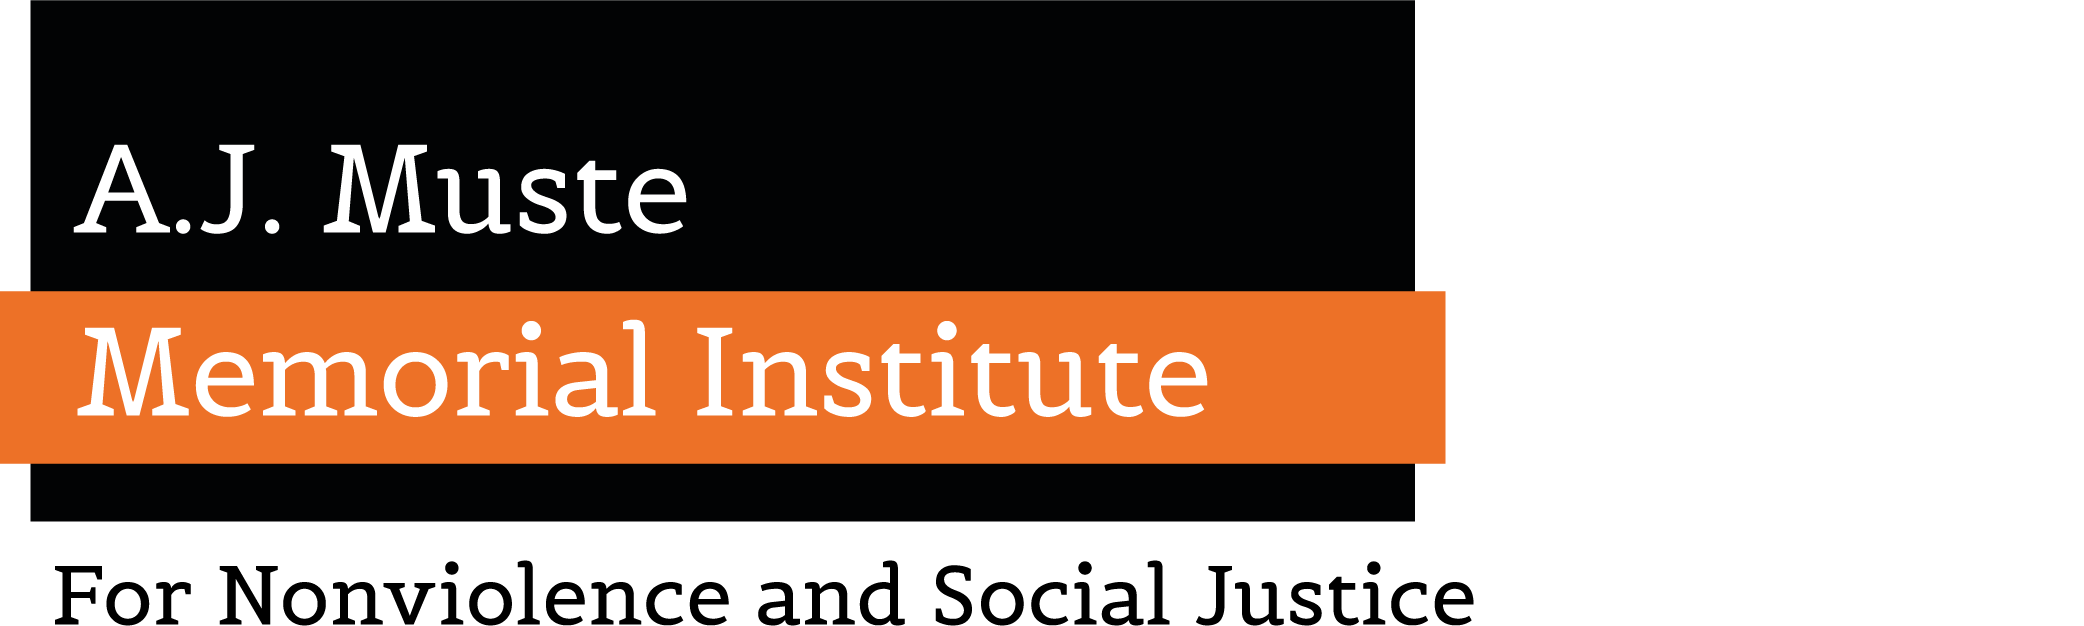 A.J. Muste Memorial Institute